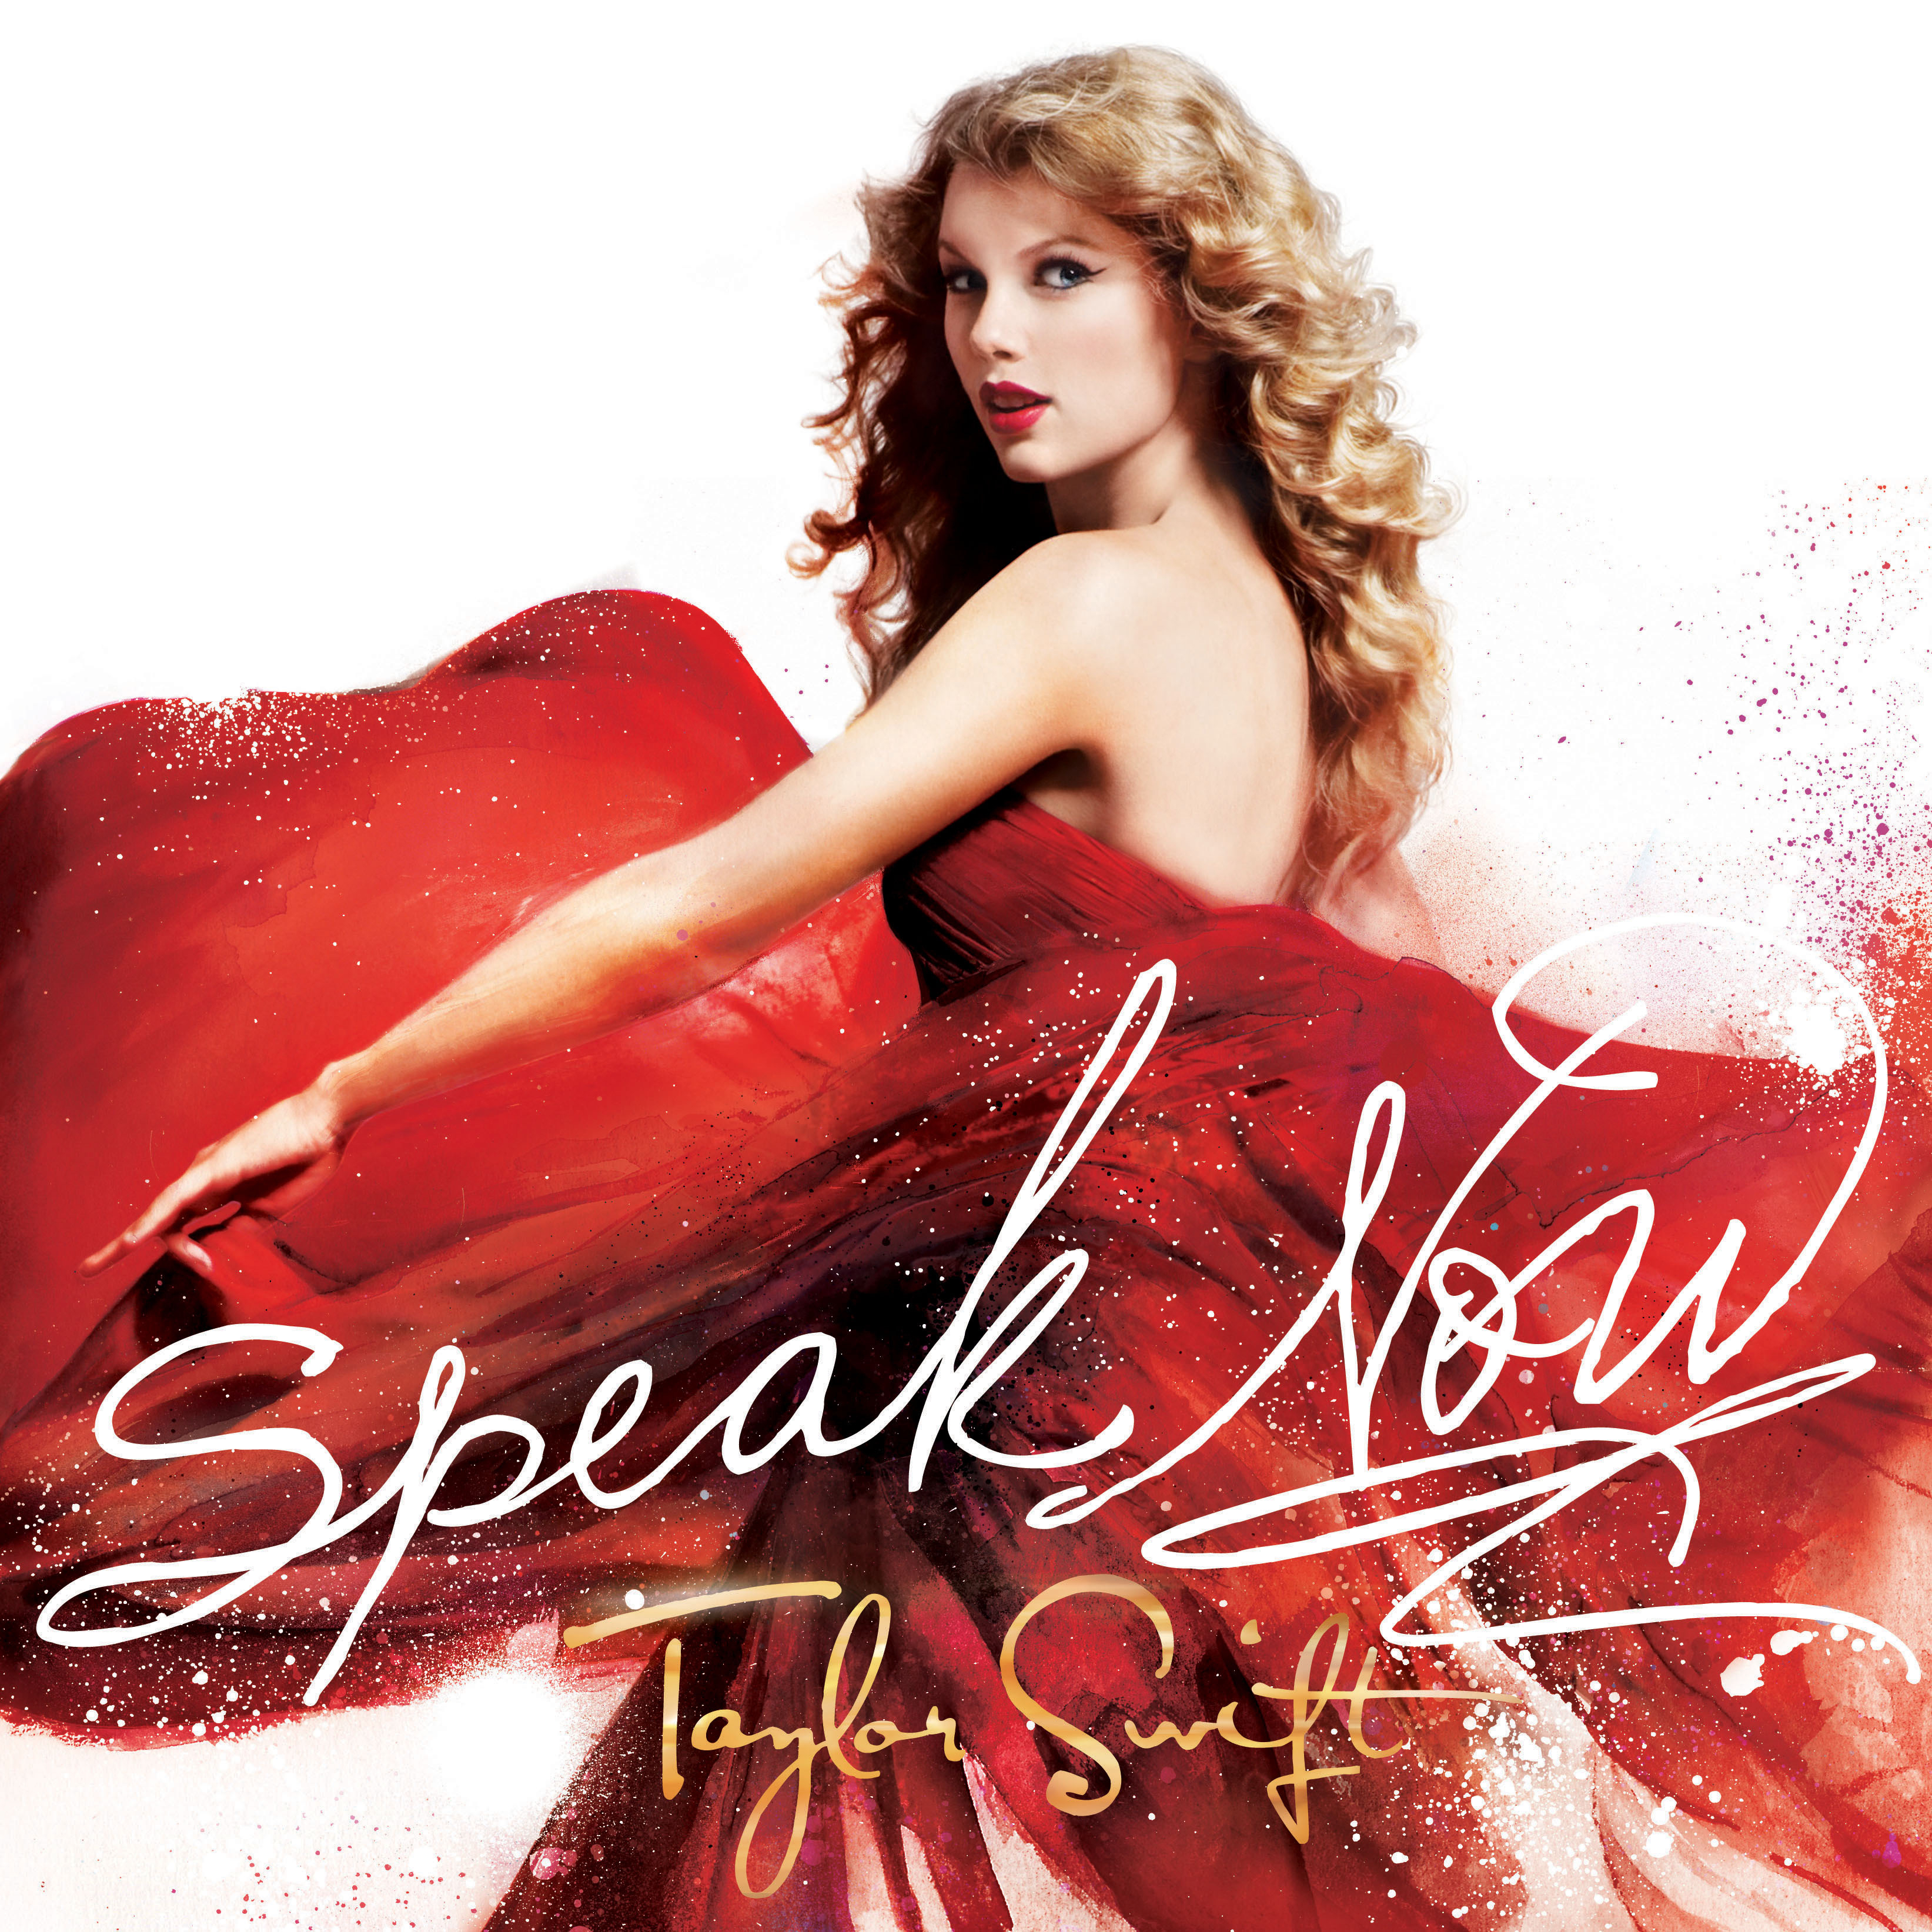 Speak Now, Taylor Swift Wiki